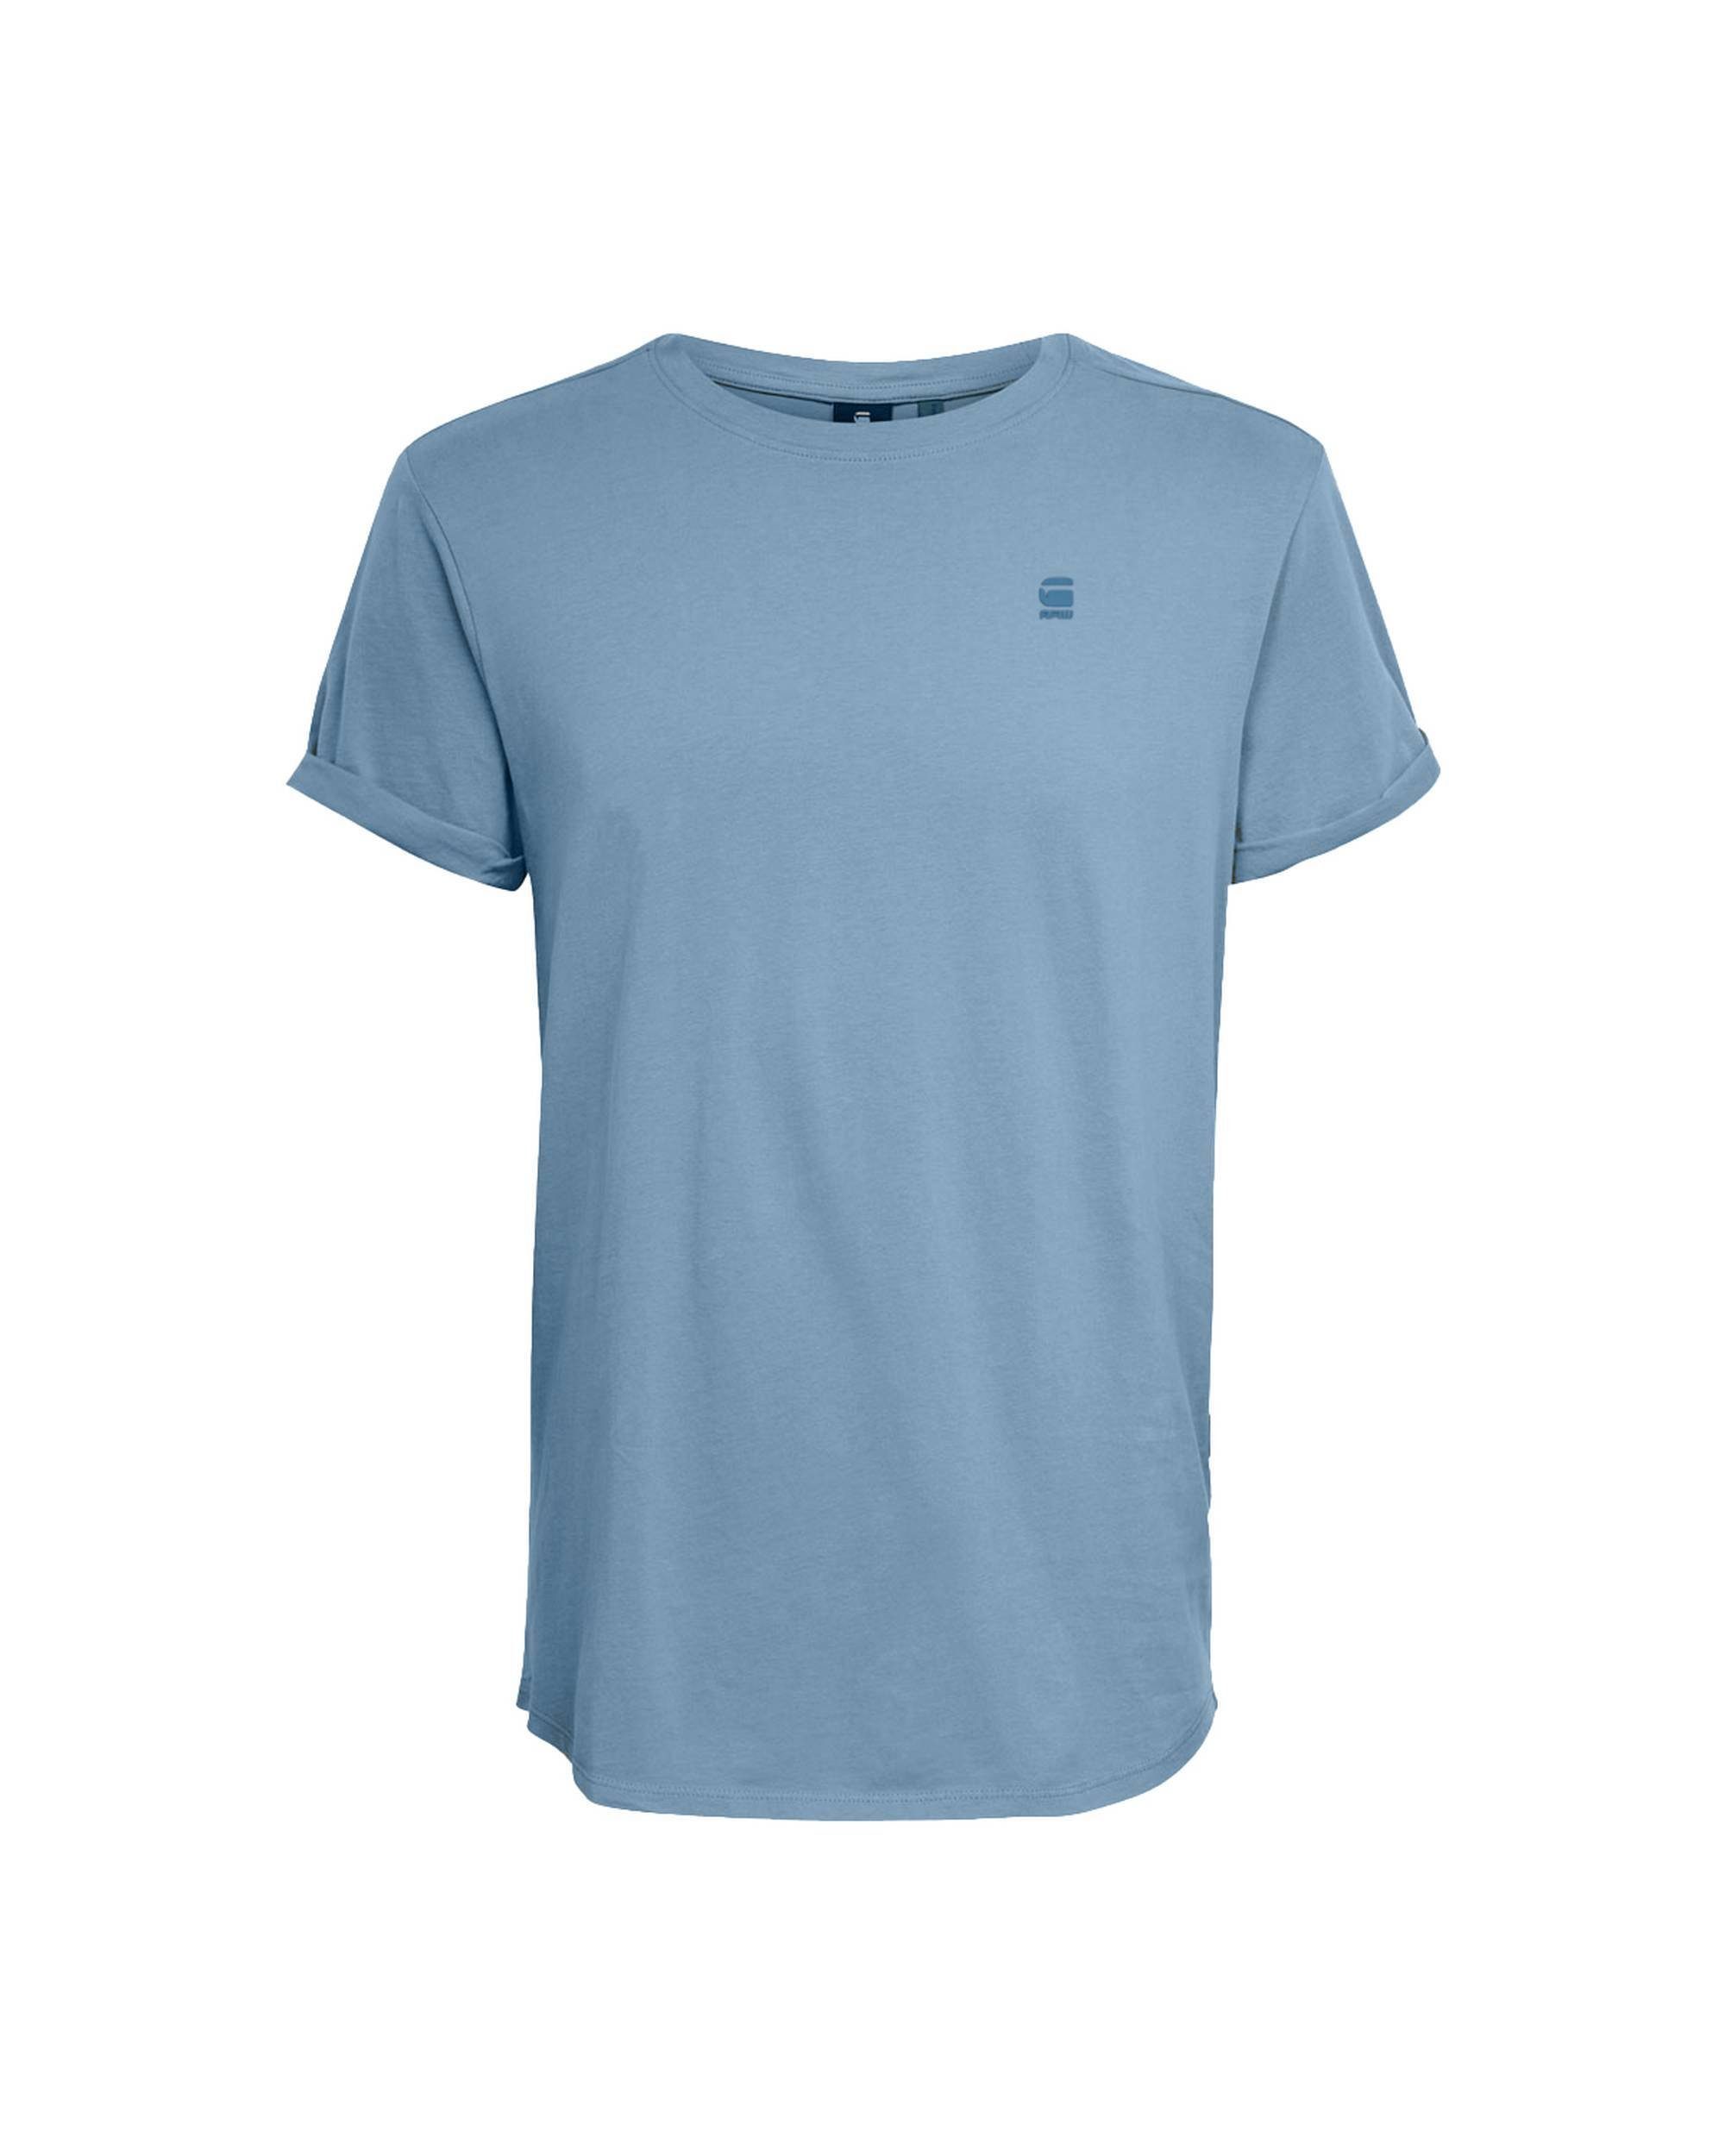 T-Shirt - Hellblau Cotton RAW Lash, Rundhals, G-Star T-Shirt Herren Organic